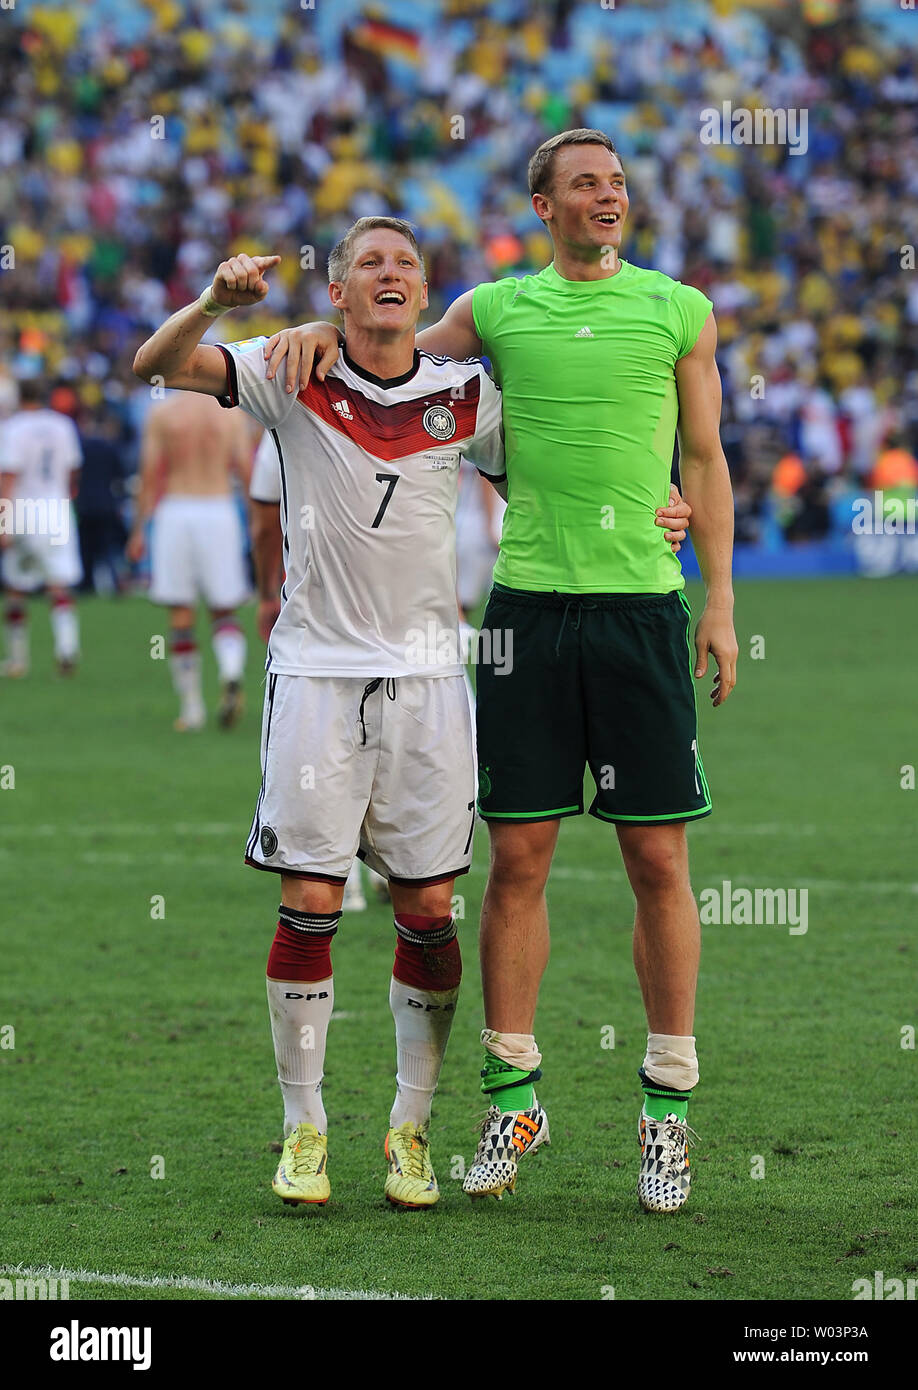 Bastian Schweinsteiger (L) and Manuel Neuer of Germany celebrate following the 2014 FIFA World Cup Quarter Final match at the Estadio do Maracana in Rio de Janeiro, Brazil on July 04, 2014. UPI/Chris Brunskill Stock Photo